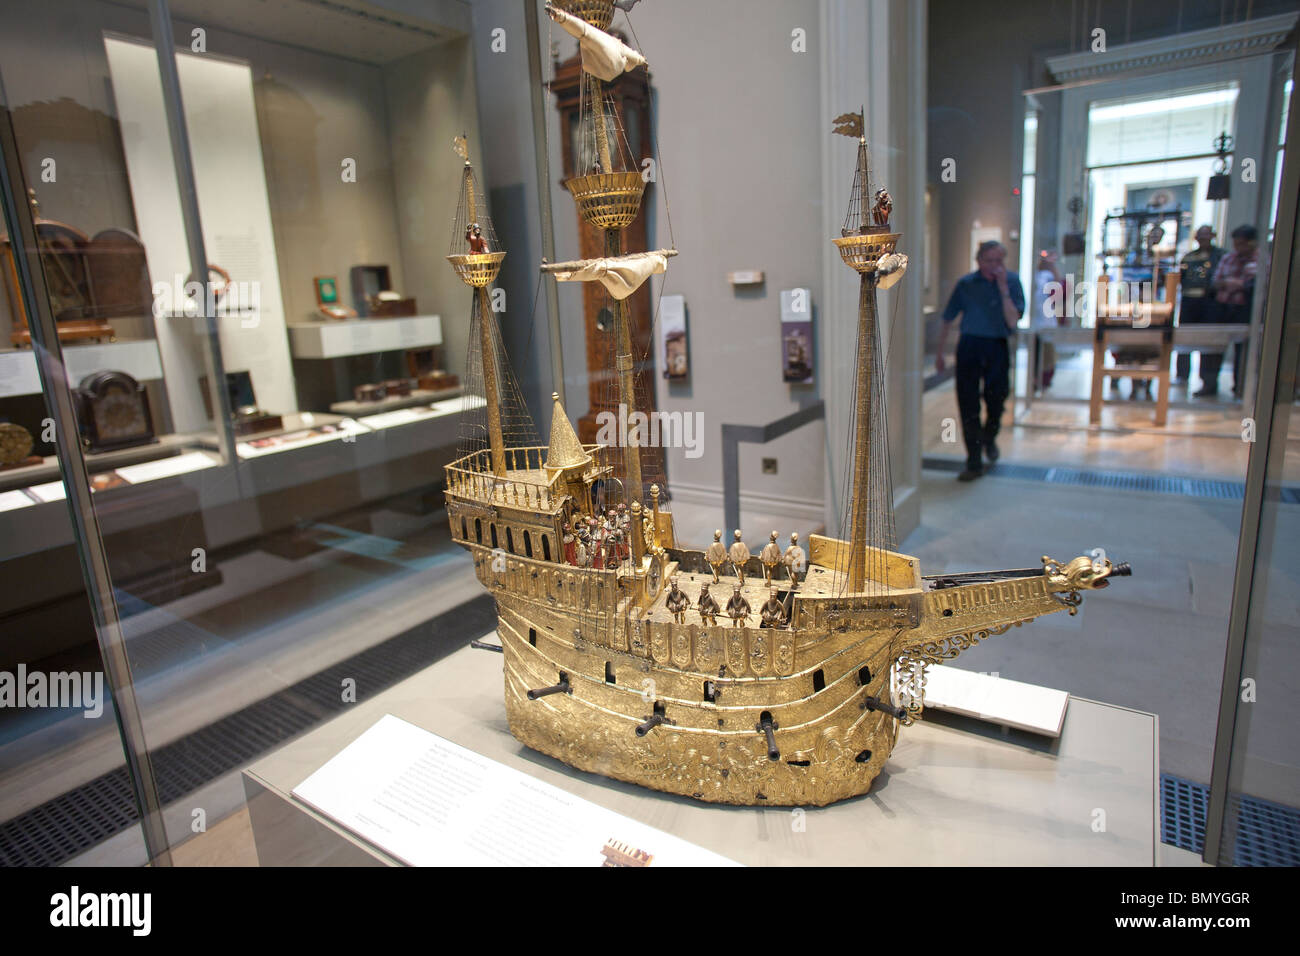 Automaton in the shape of a ship circa 1585, British Museum London GB UK Stock Photo